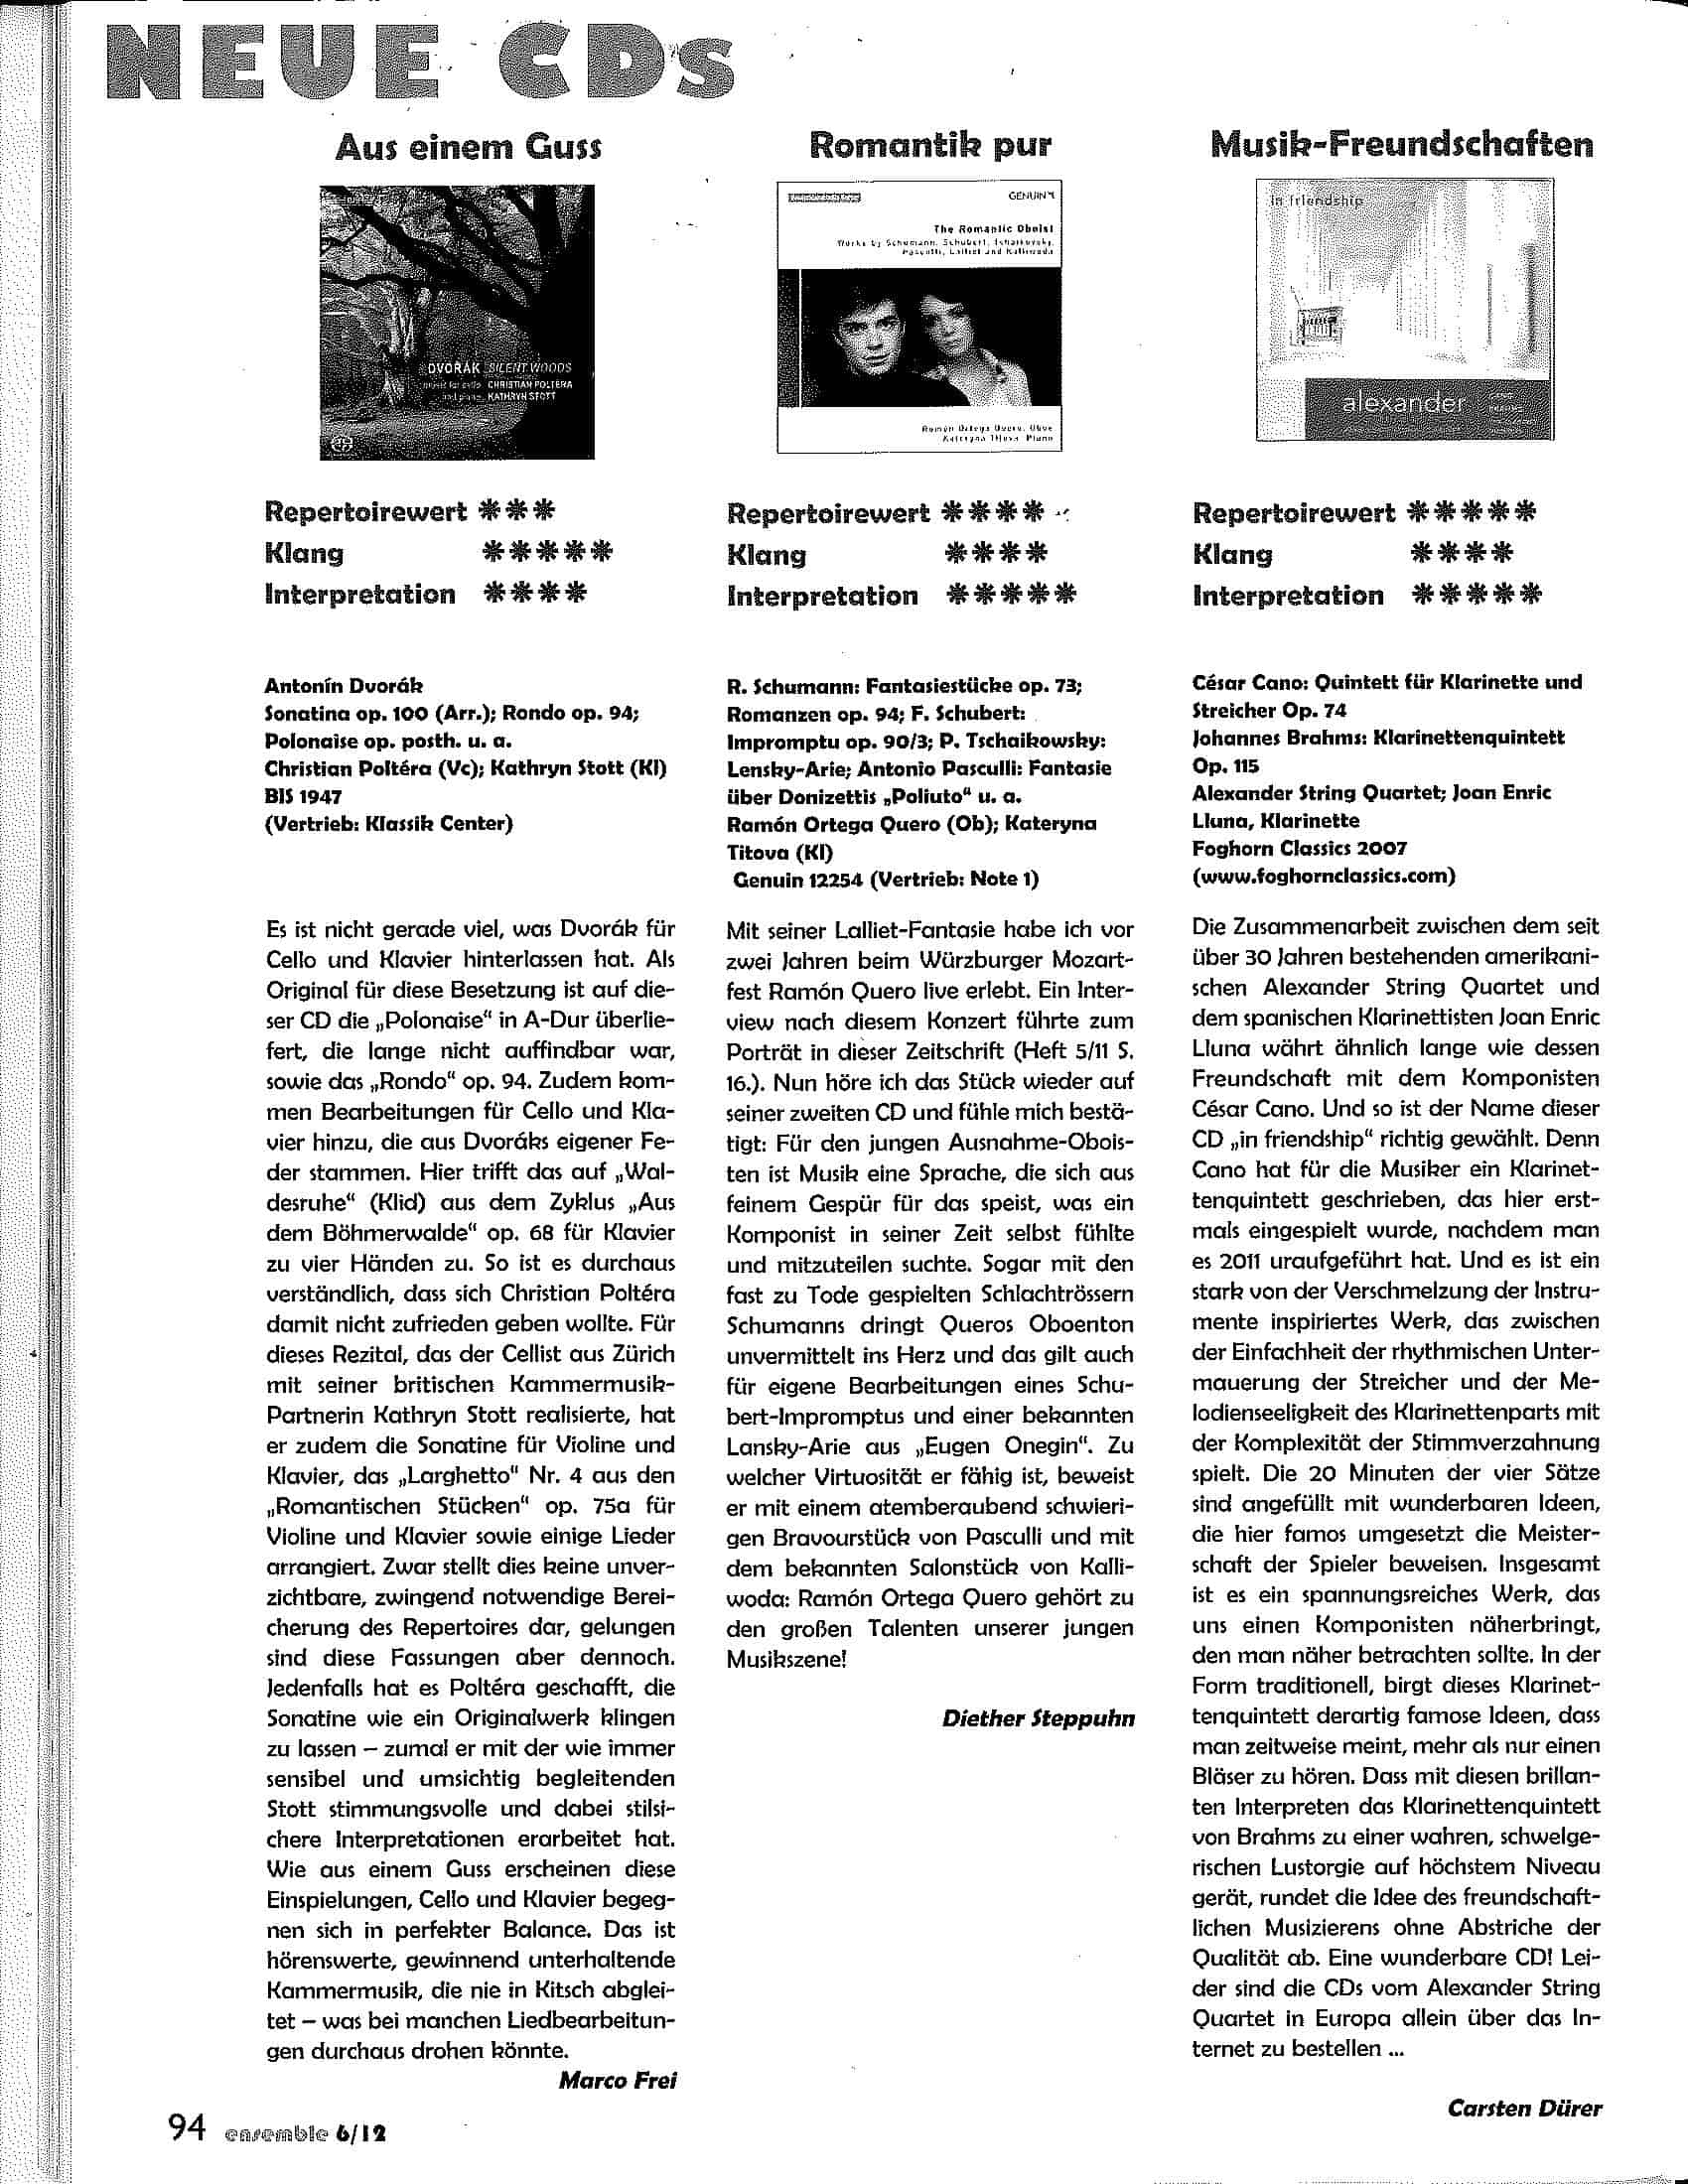 ensemble magazin review - In Friendship